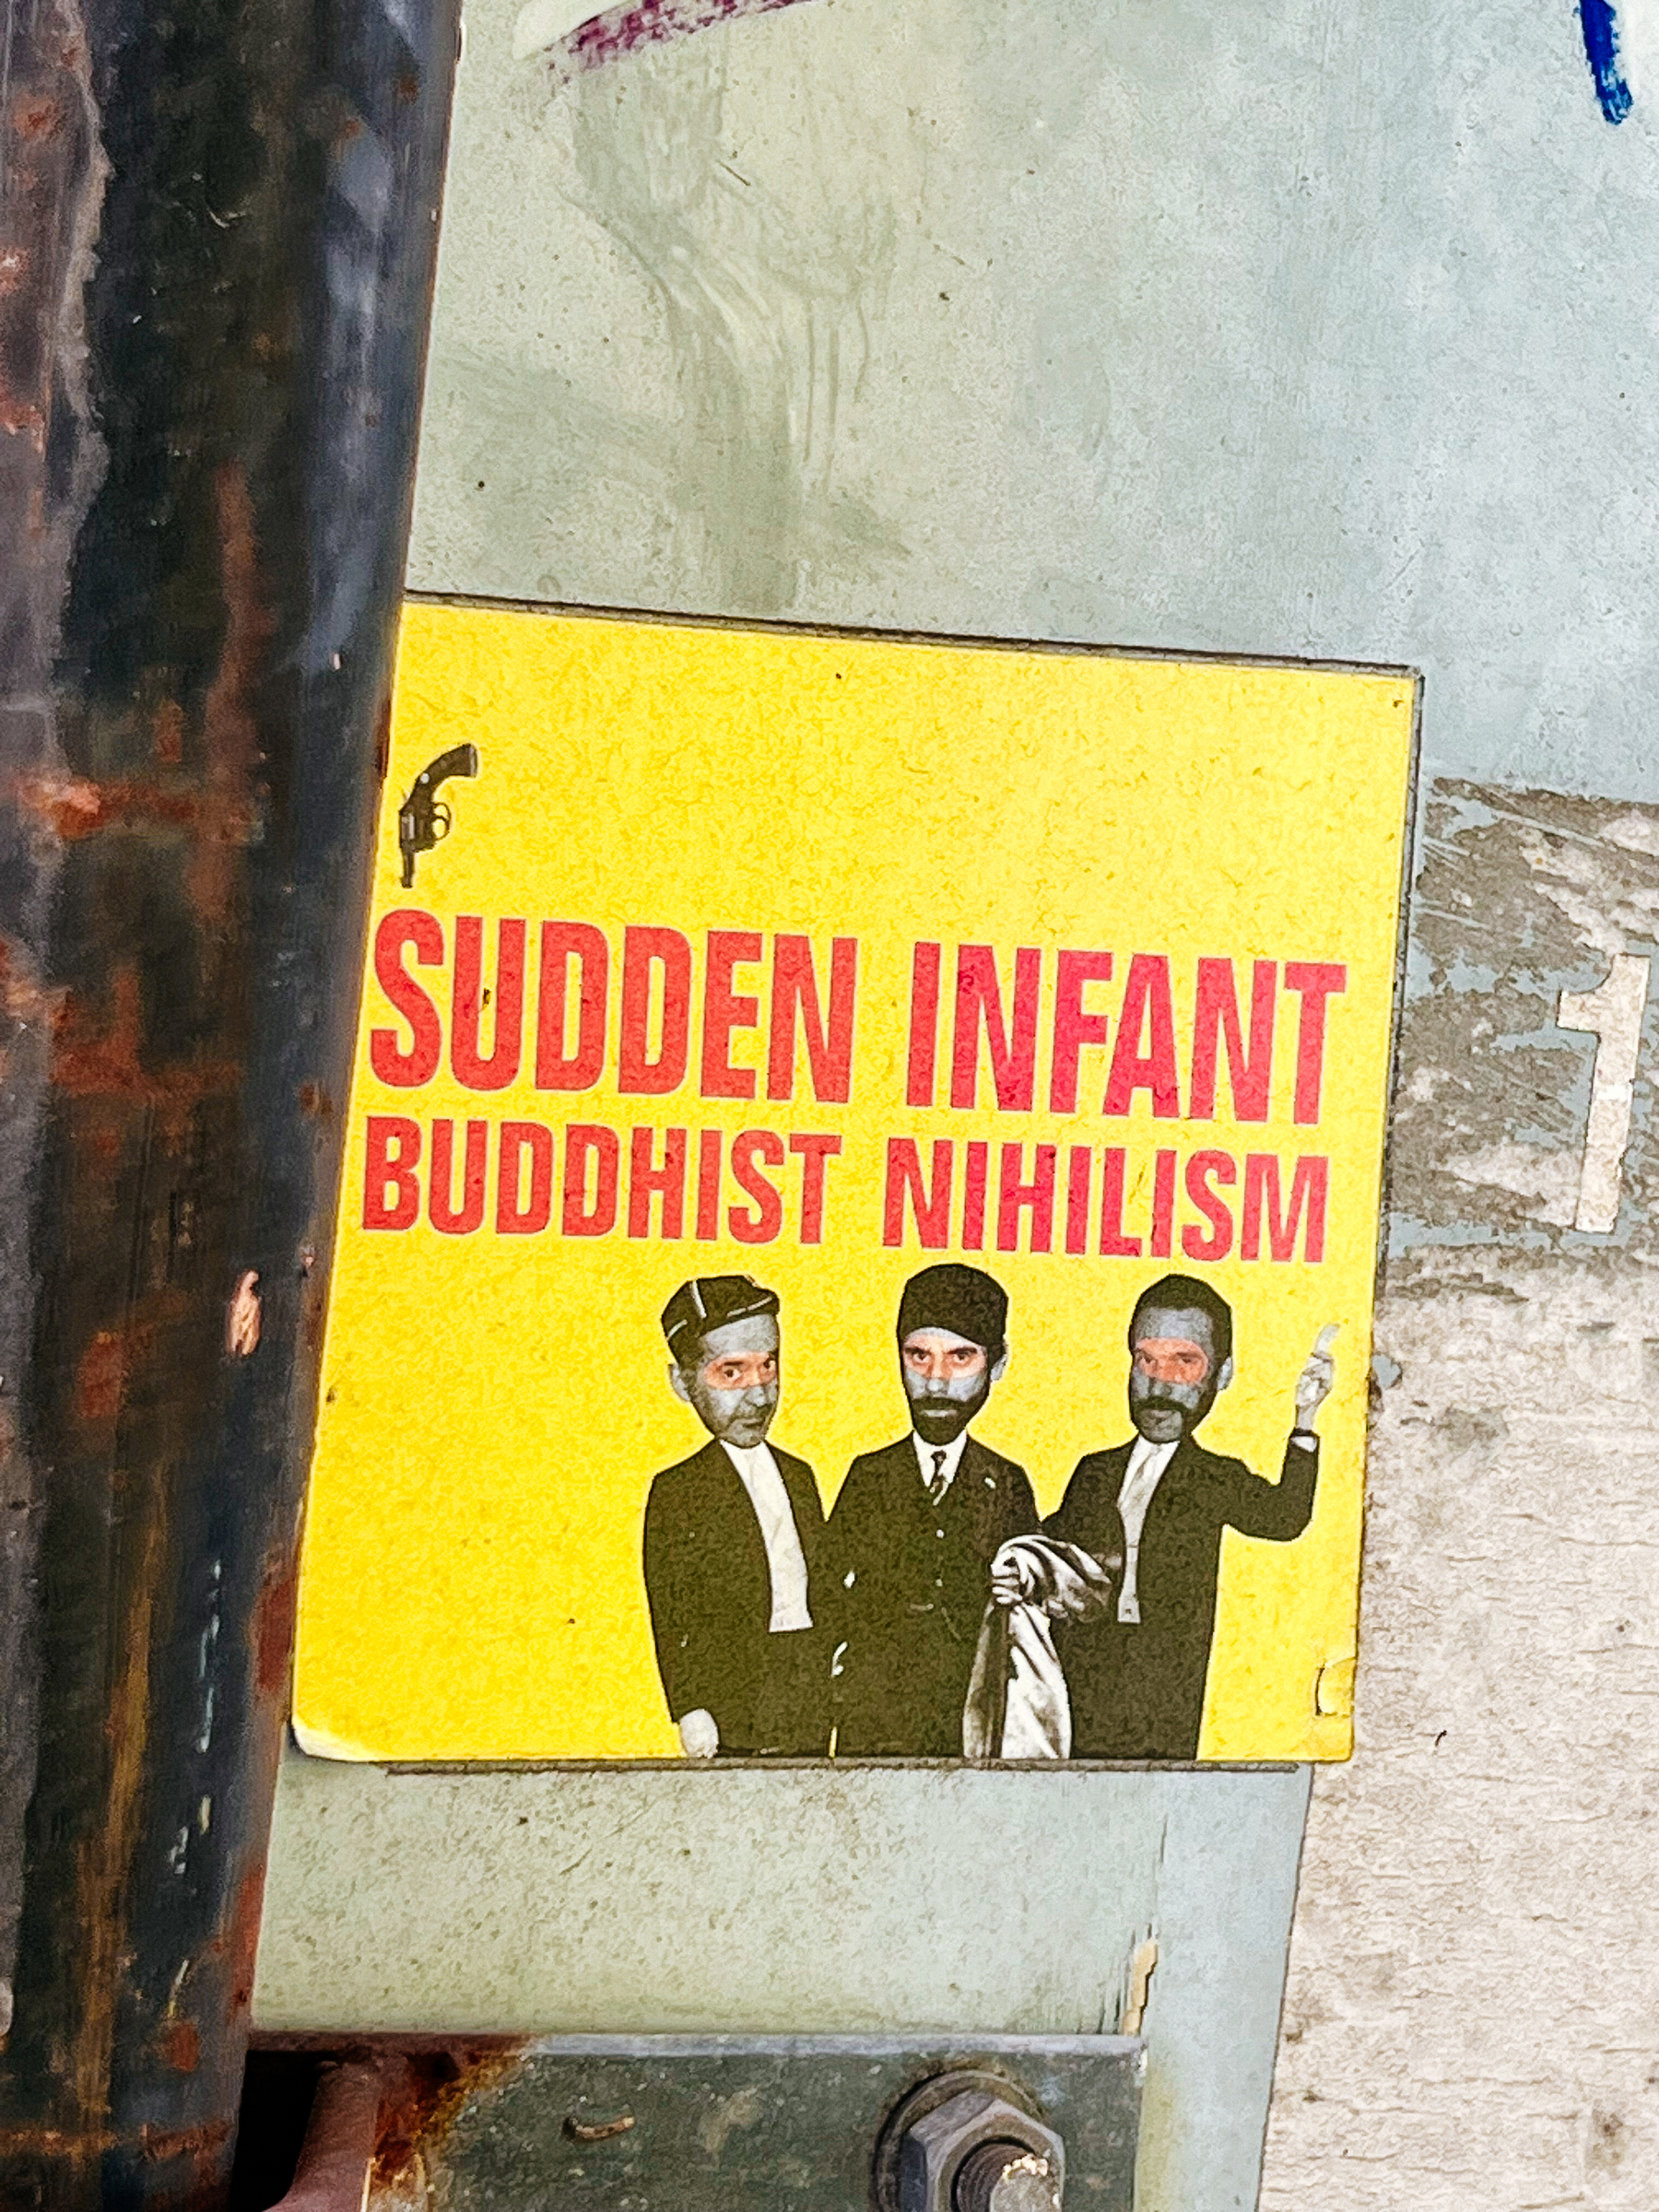 Sticker with “SUDDEN INFANT BUDDHIST NIHILISM”, and three little men. 